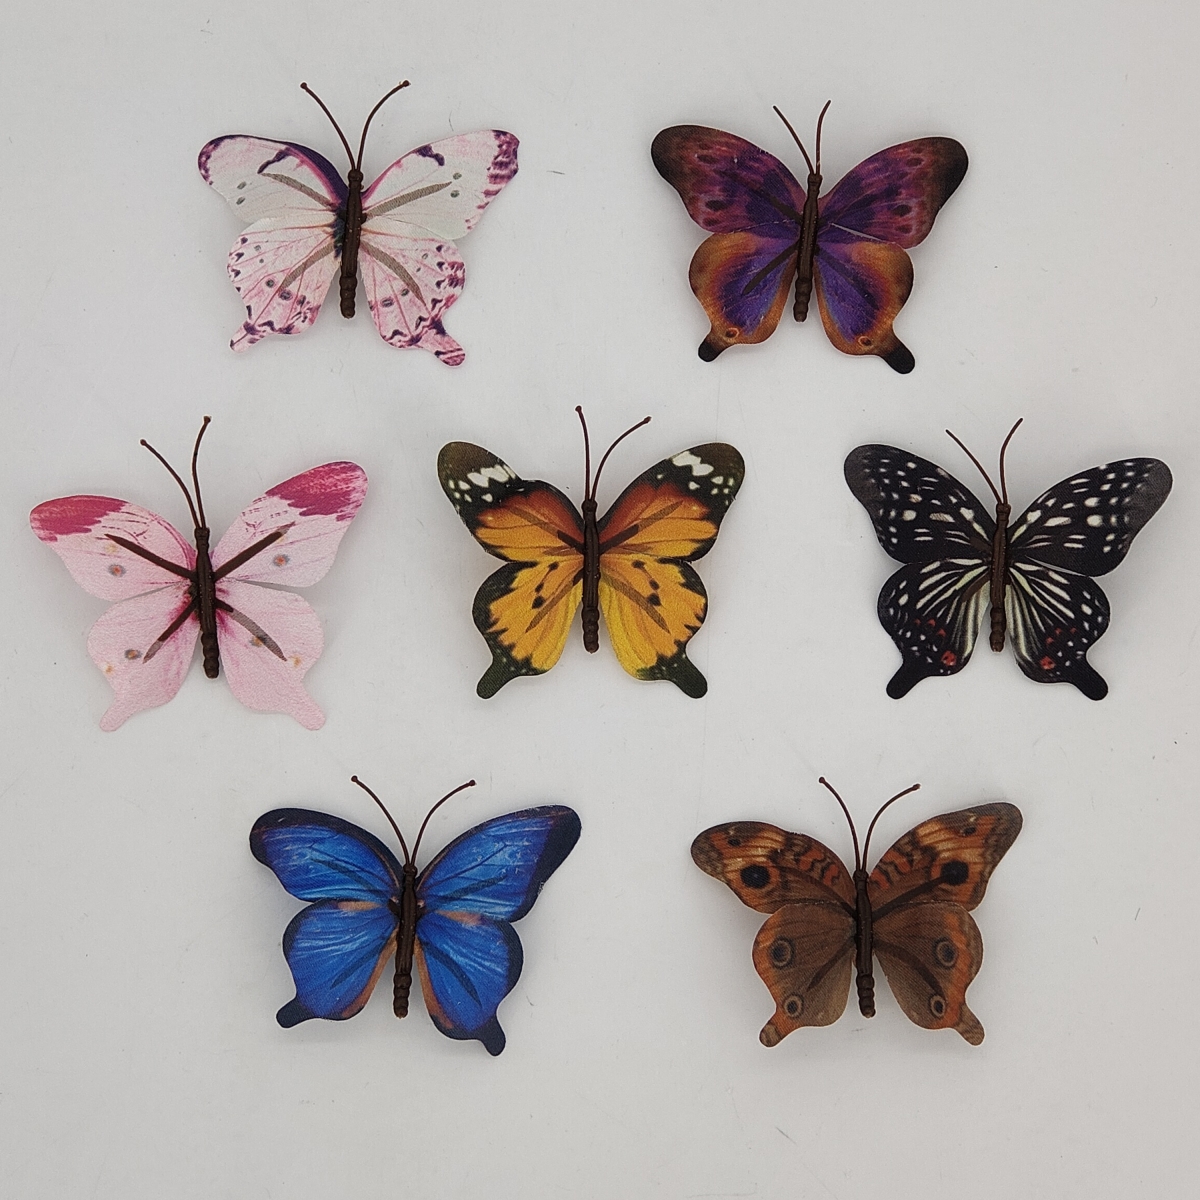 Grosir 3D printing kupu-kupu, pemasok bunga buatan China, bunga mahkota kupu-kupu, kepala kupu-kupu palsu untuk dekorasi karangan bunga rambut ikat kepala-Sunyfar Bunga Buatan, Pabrik China, Pemasok, Produsen, Grosir